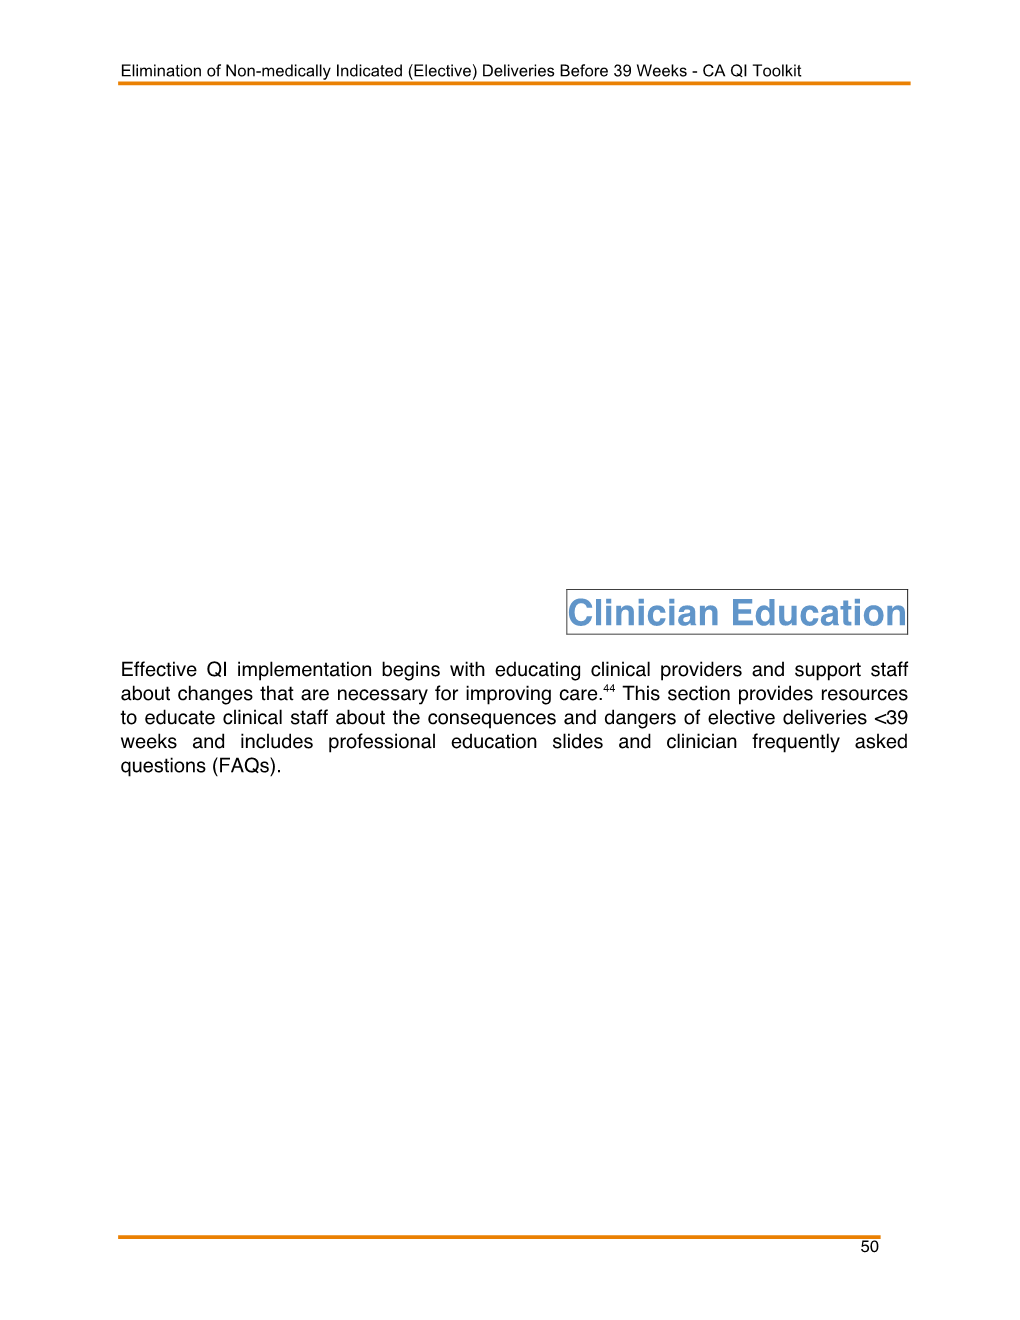 Clinician Education